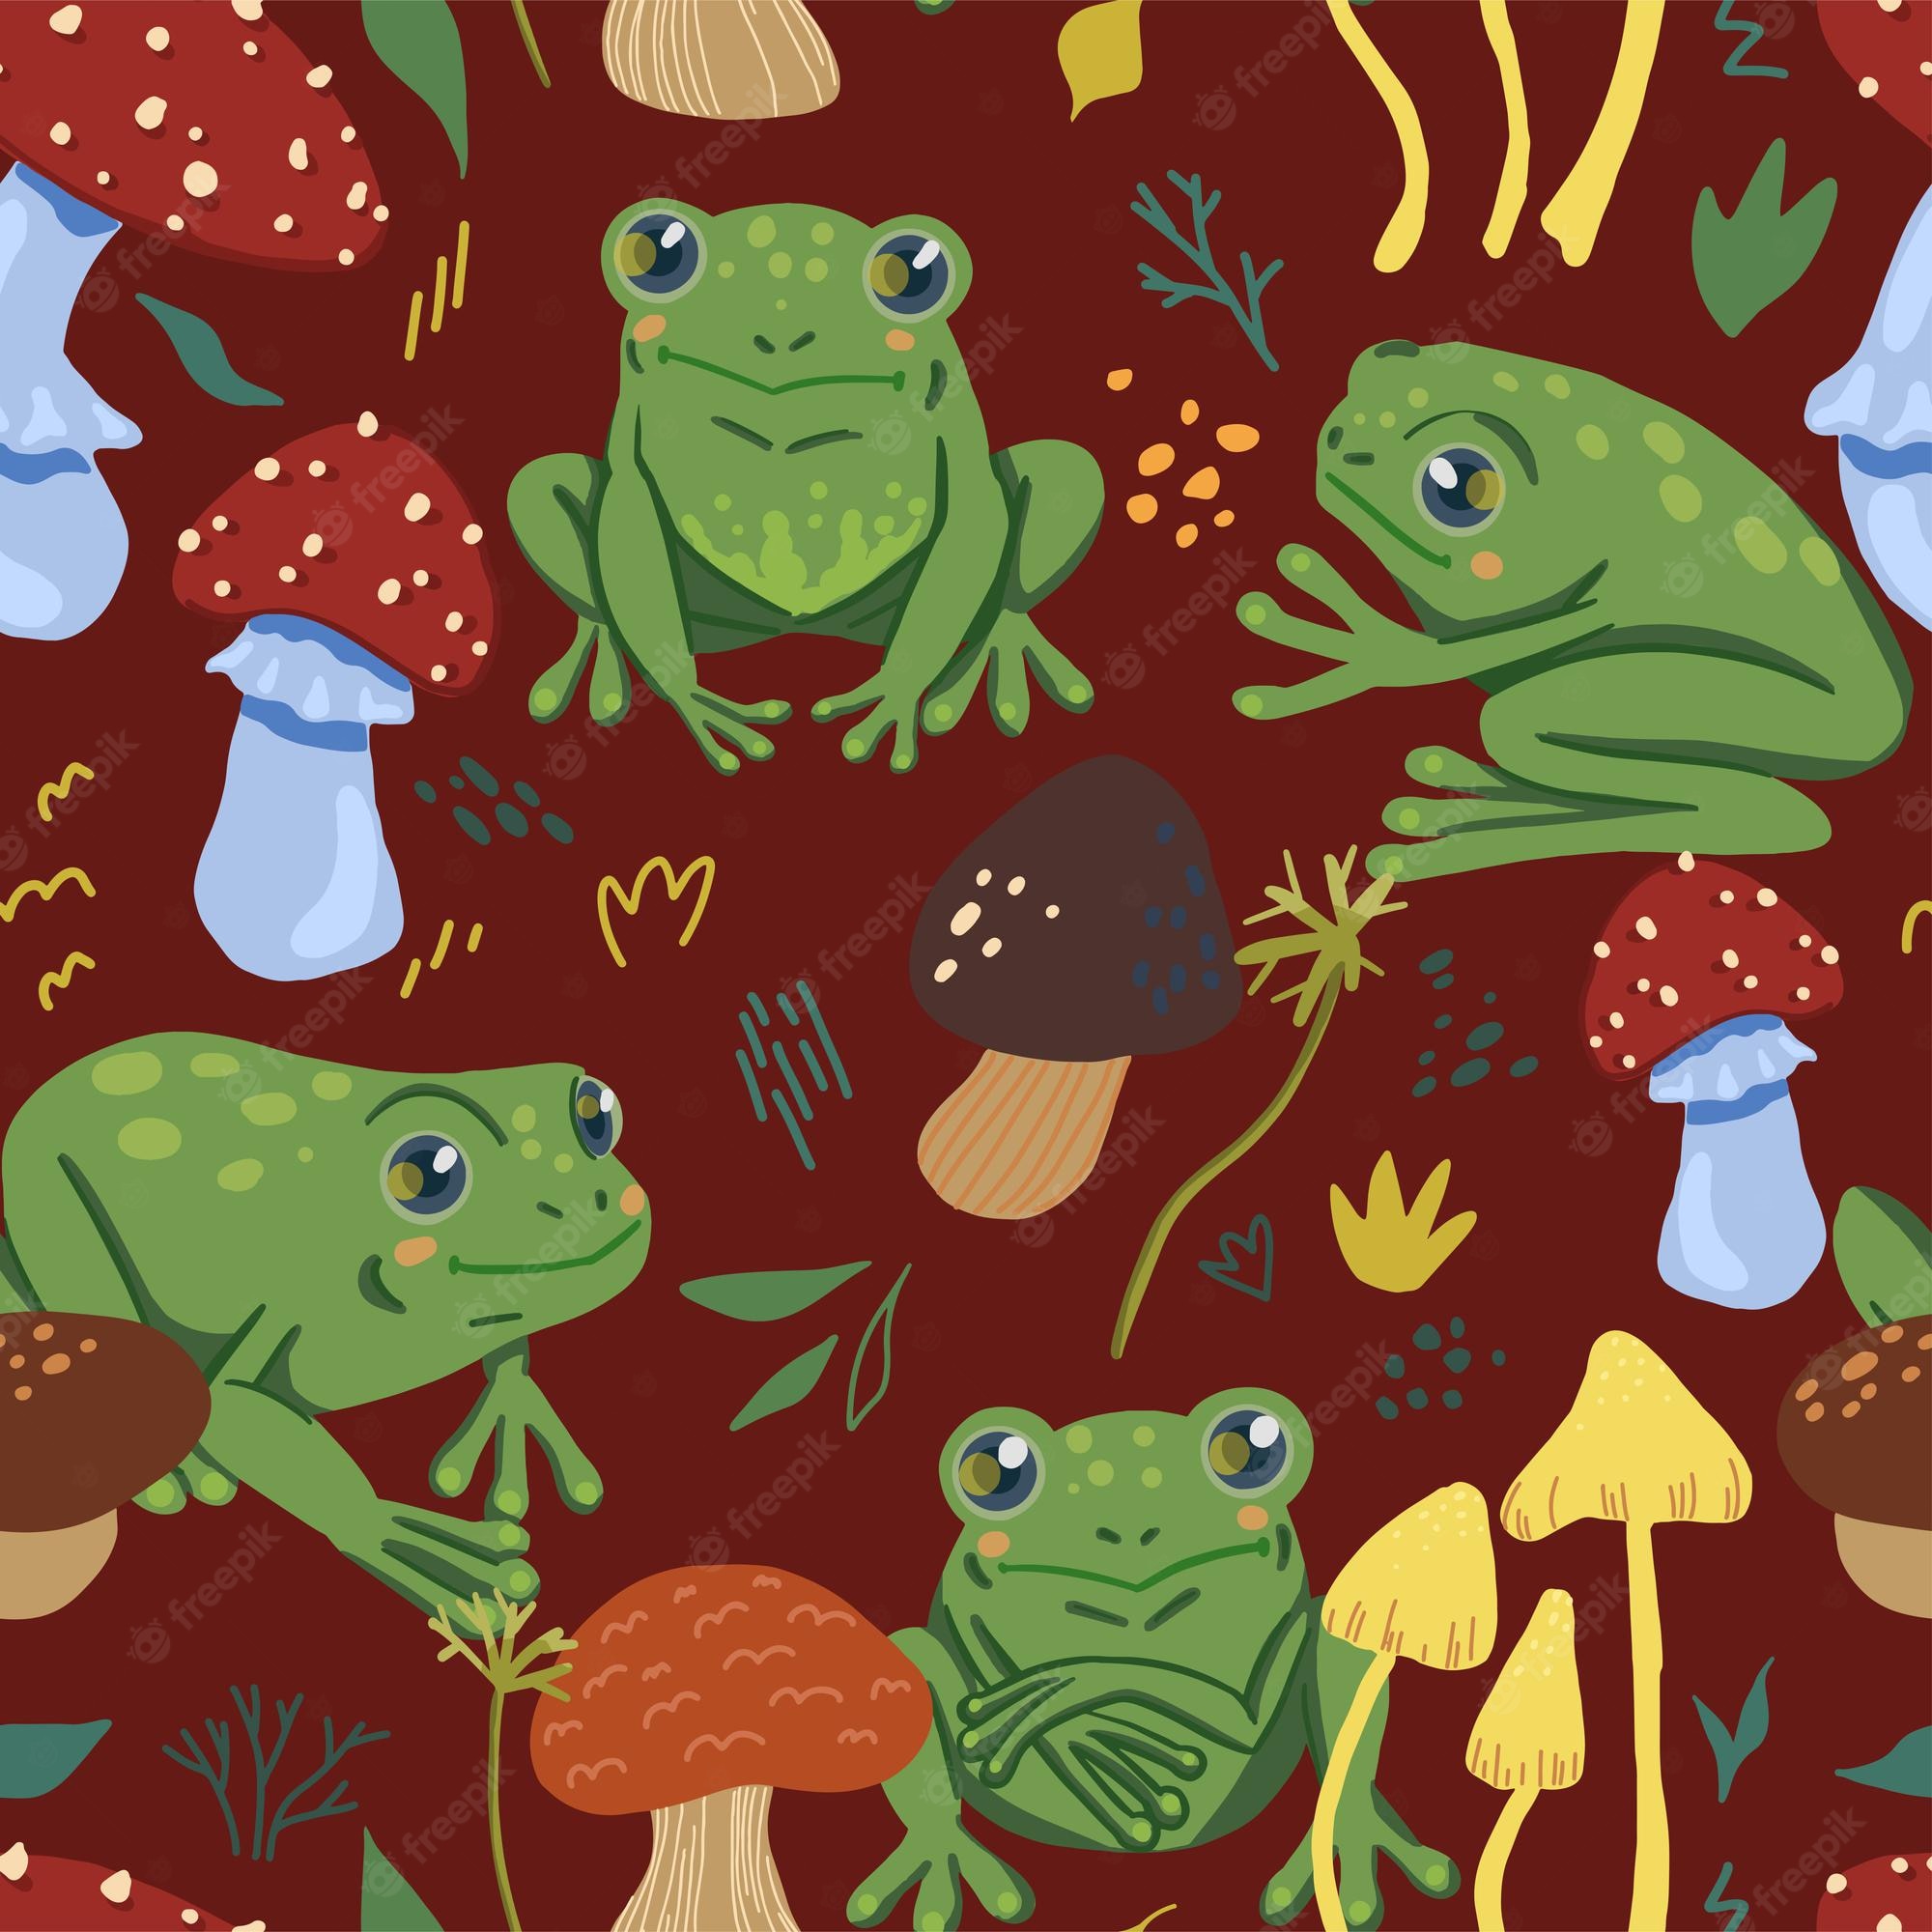 Forg wallpaper  Frog wallpaper Cute tumblr wallpaper Frog drawing